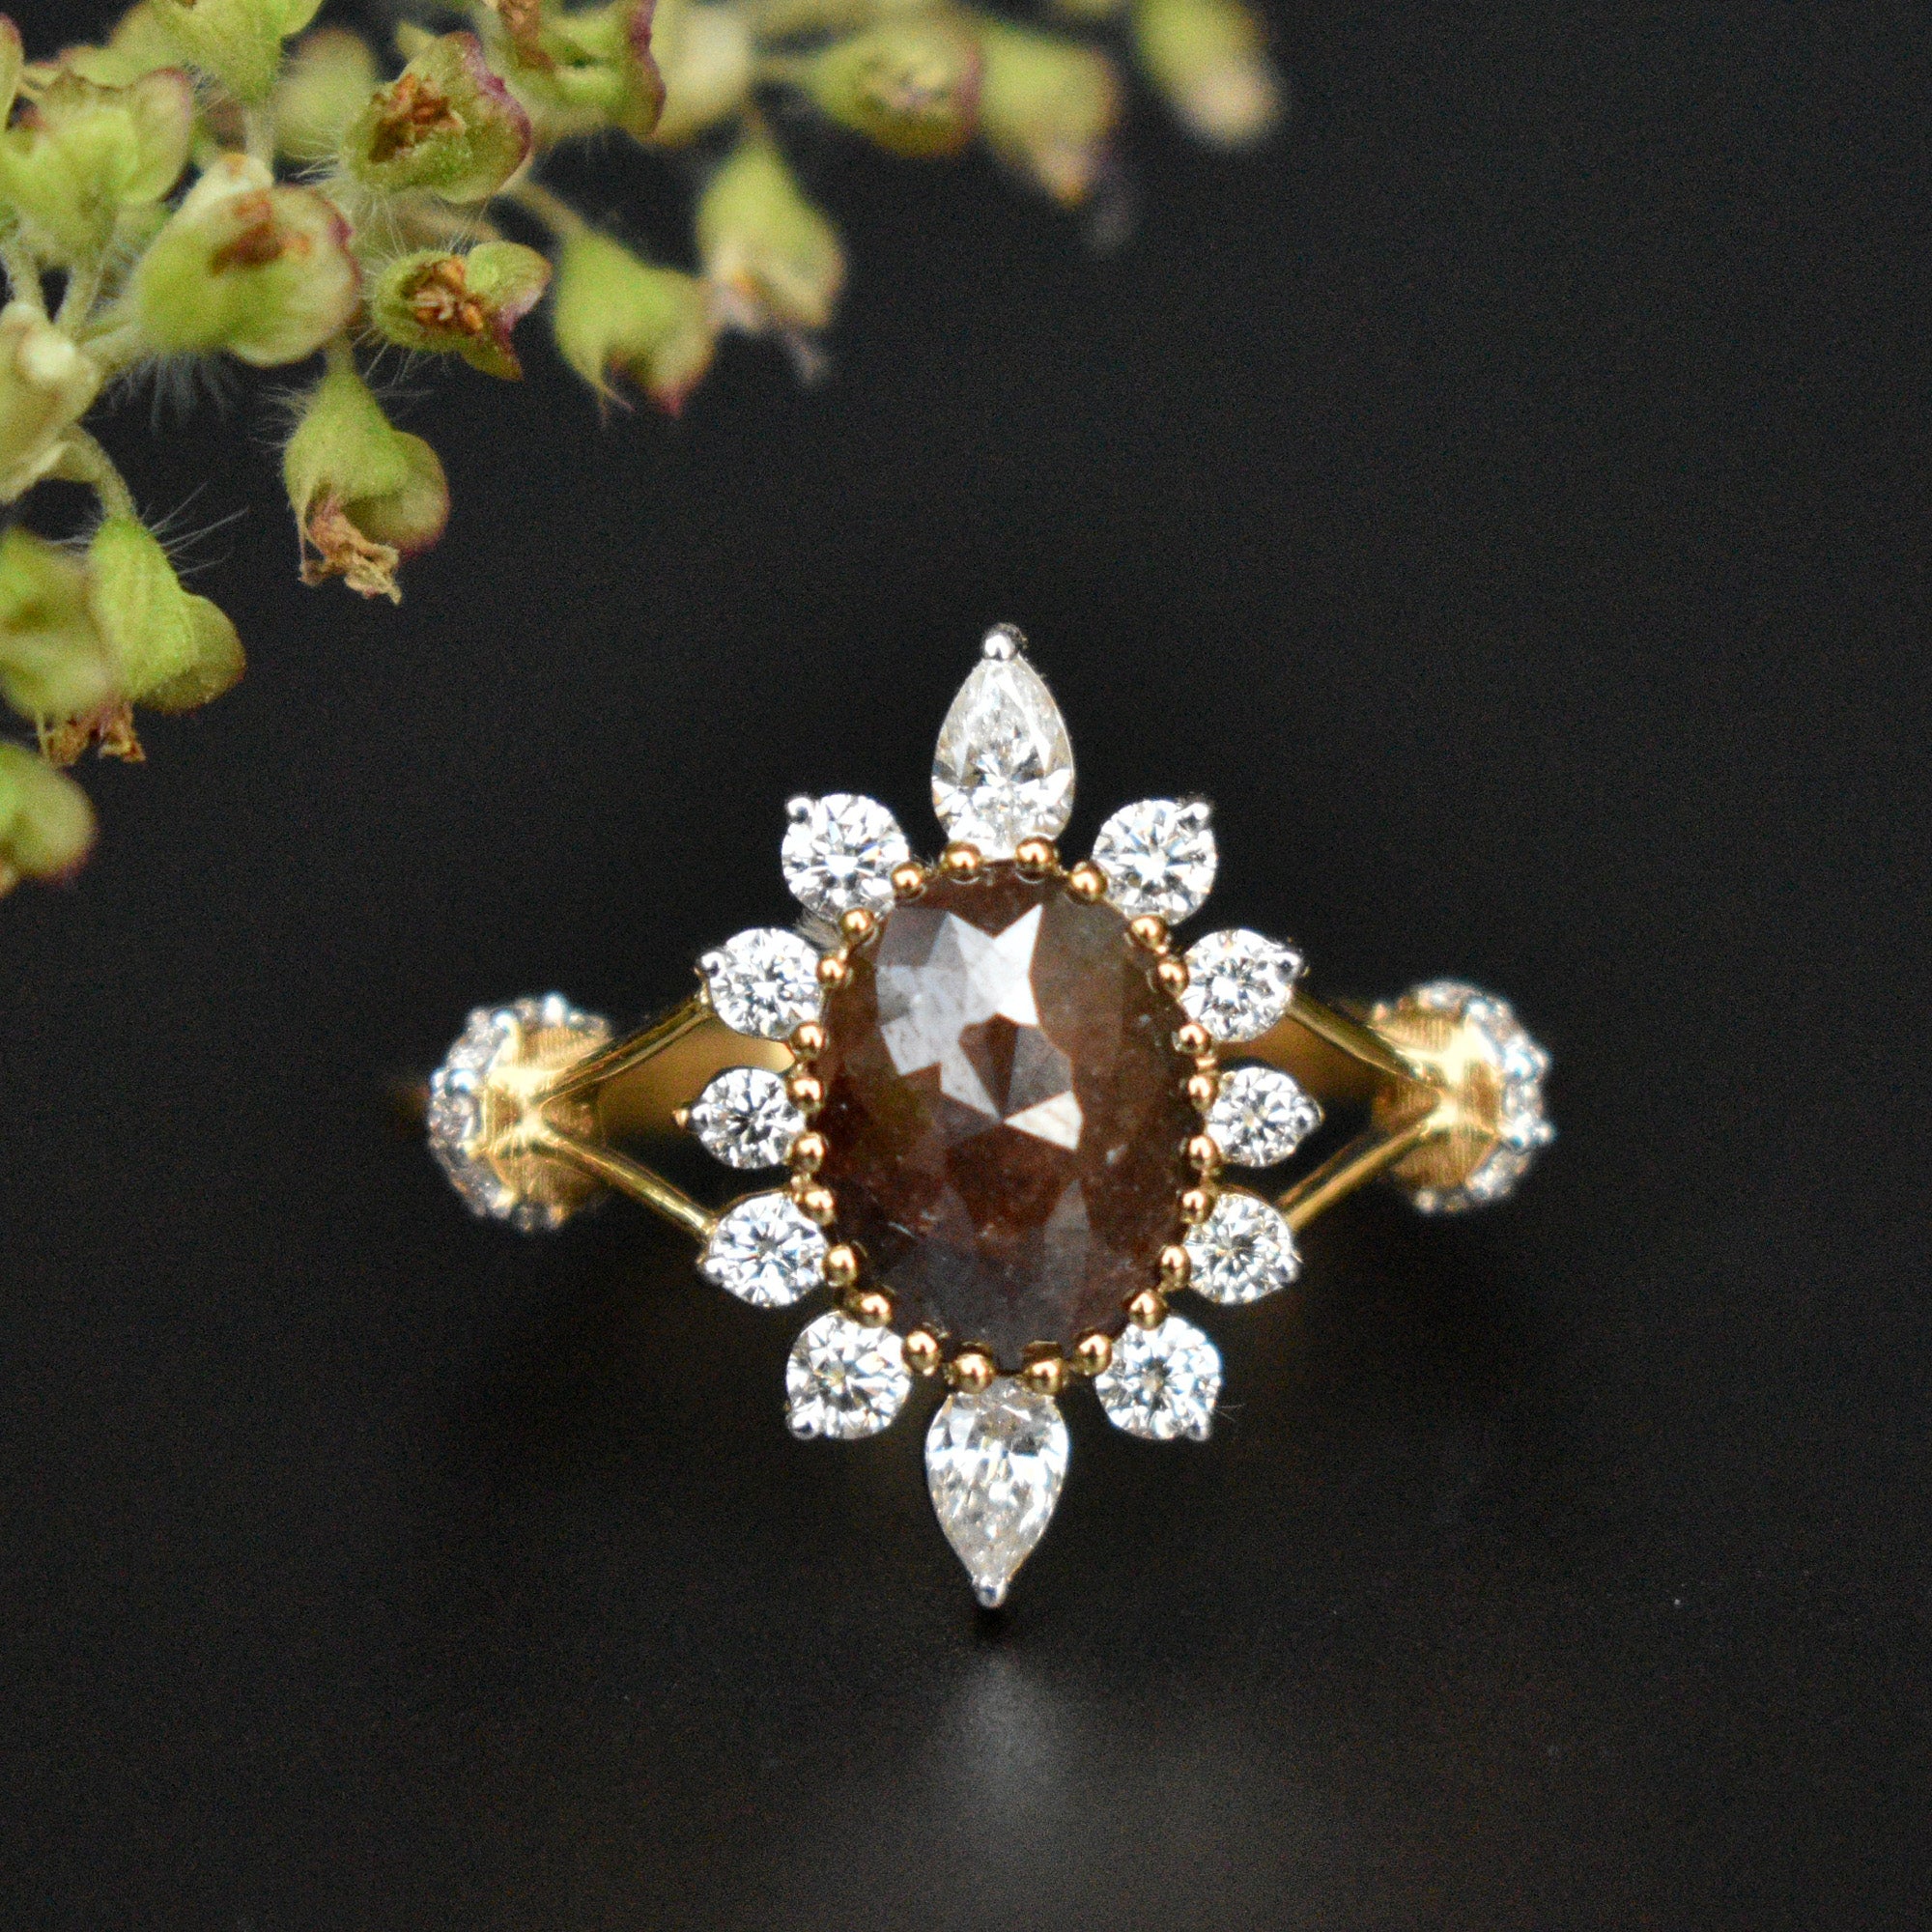 Dark Chocolate Brown Oval Rose Cut Diamond Ring with Pear and Round White Diamond Halo